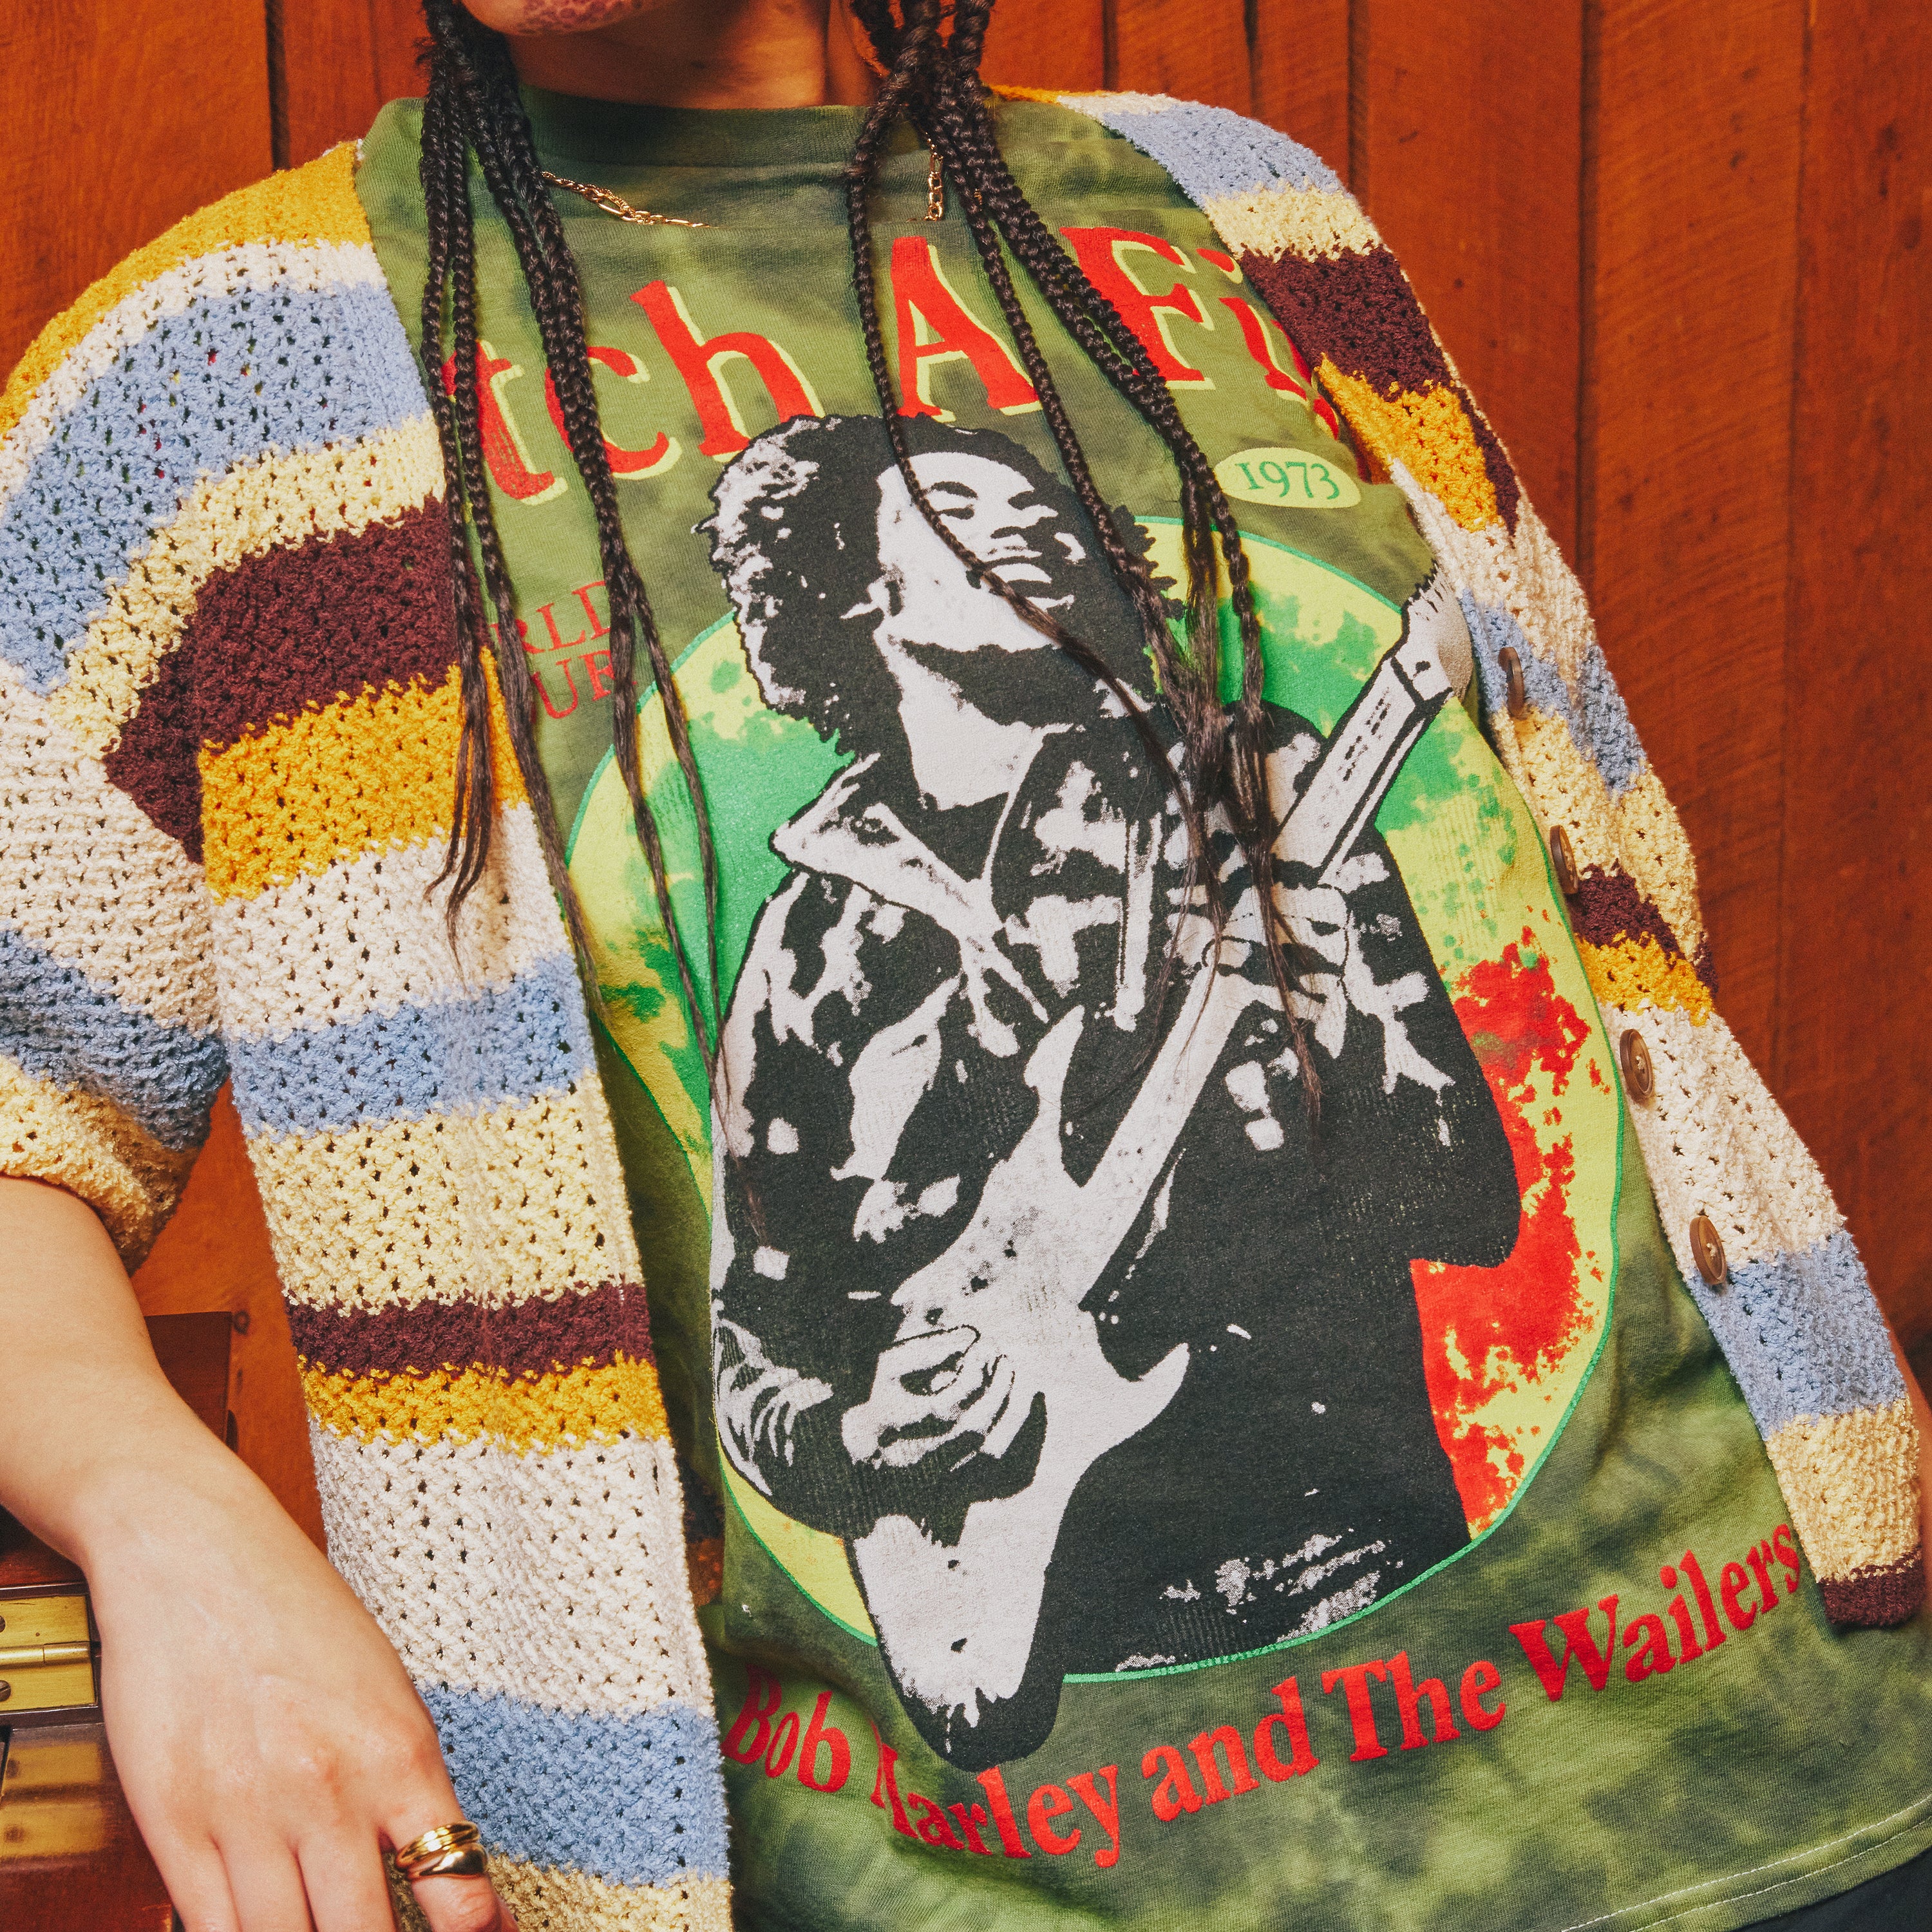 Bob Marley - Catch A Fire Tie Dye Green T-Shirt